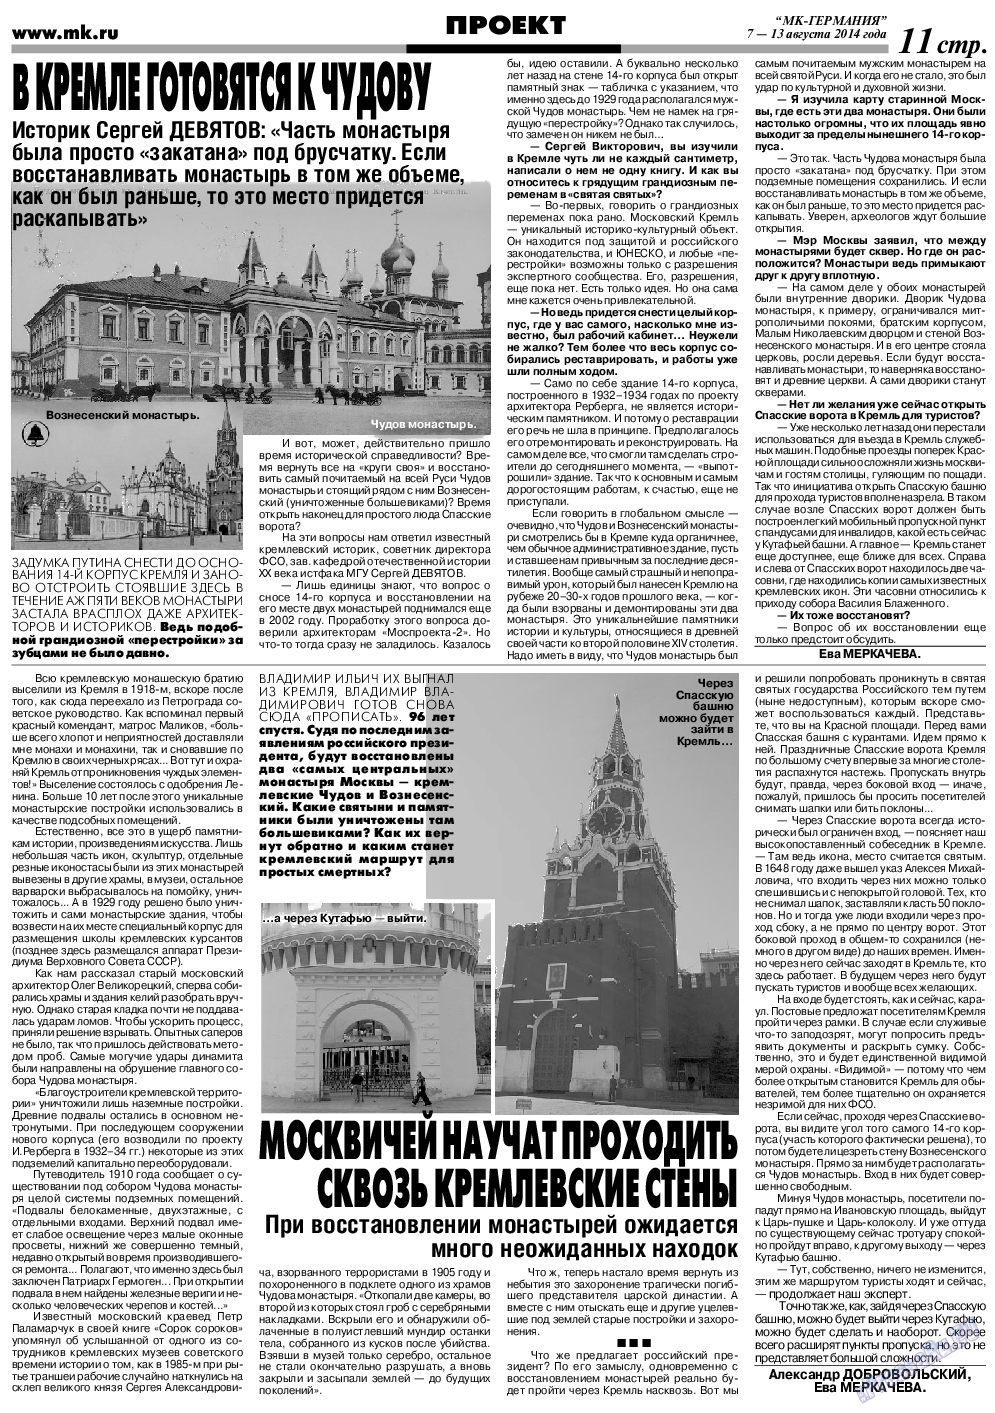 МК-Германия, газета. 2014 №32 стр.11